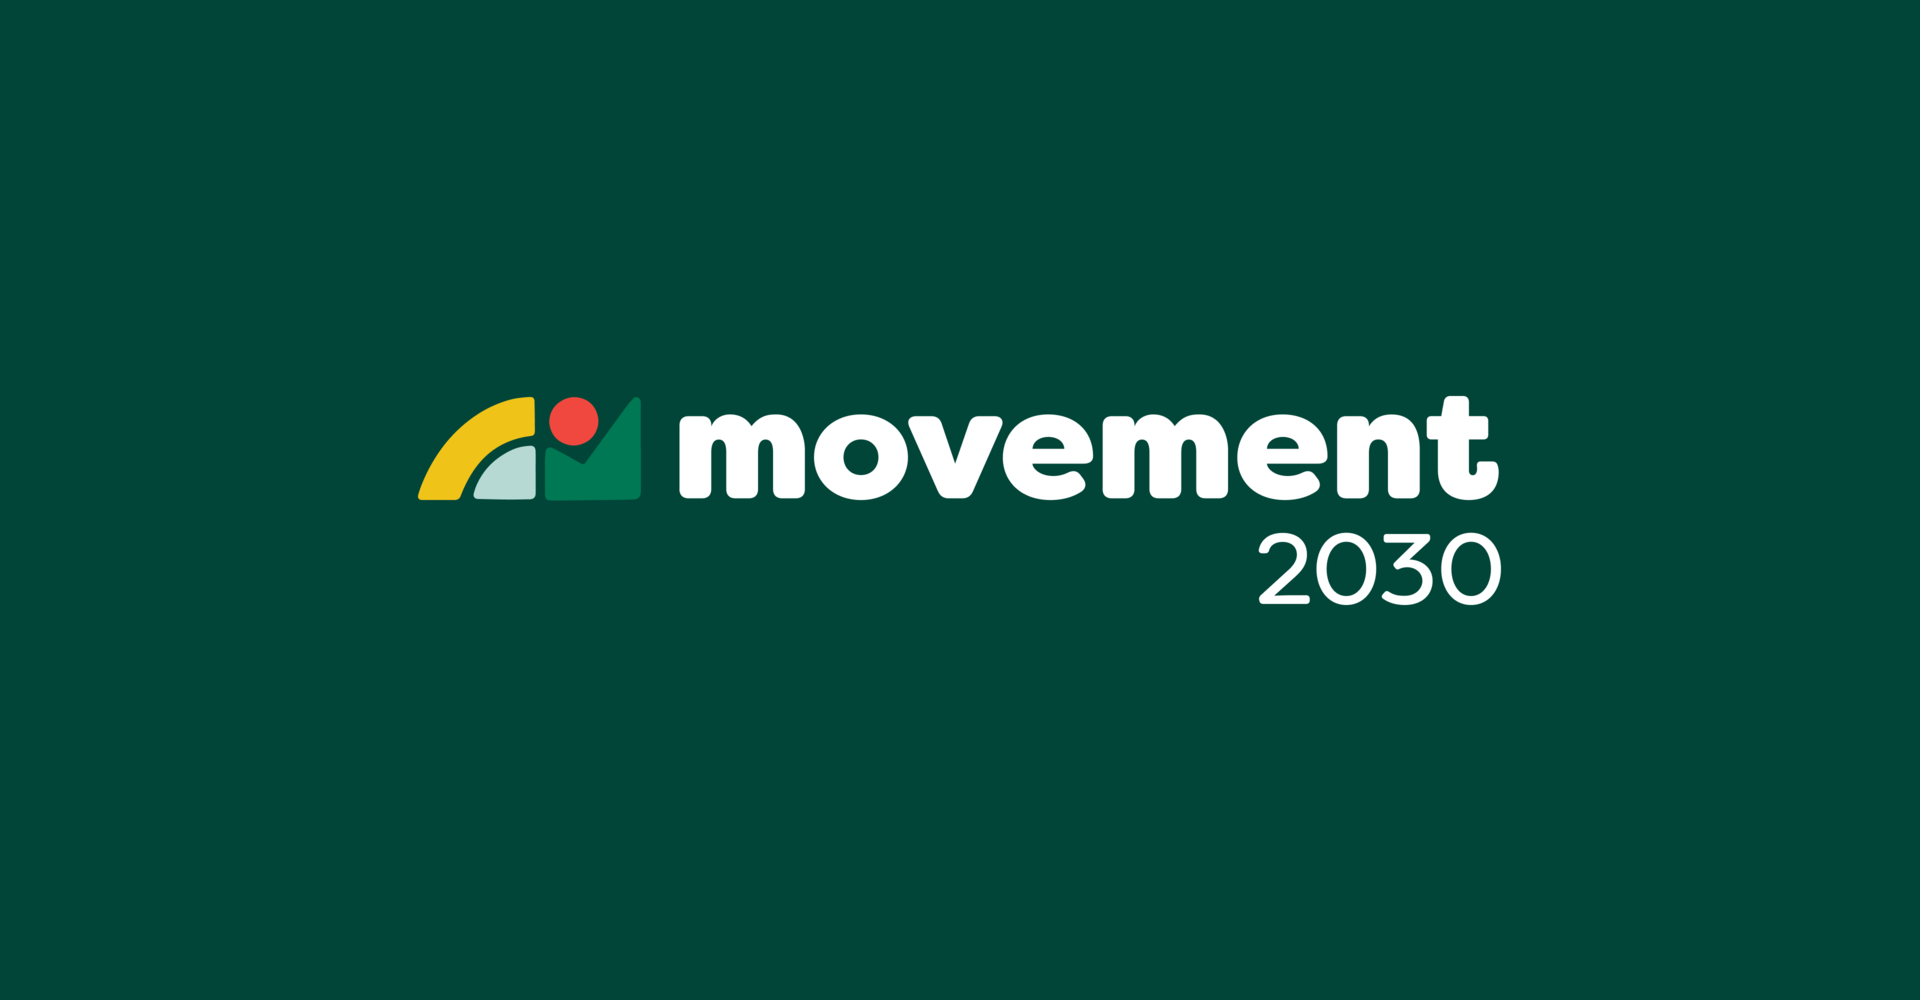 Movement 2030 Final Image